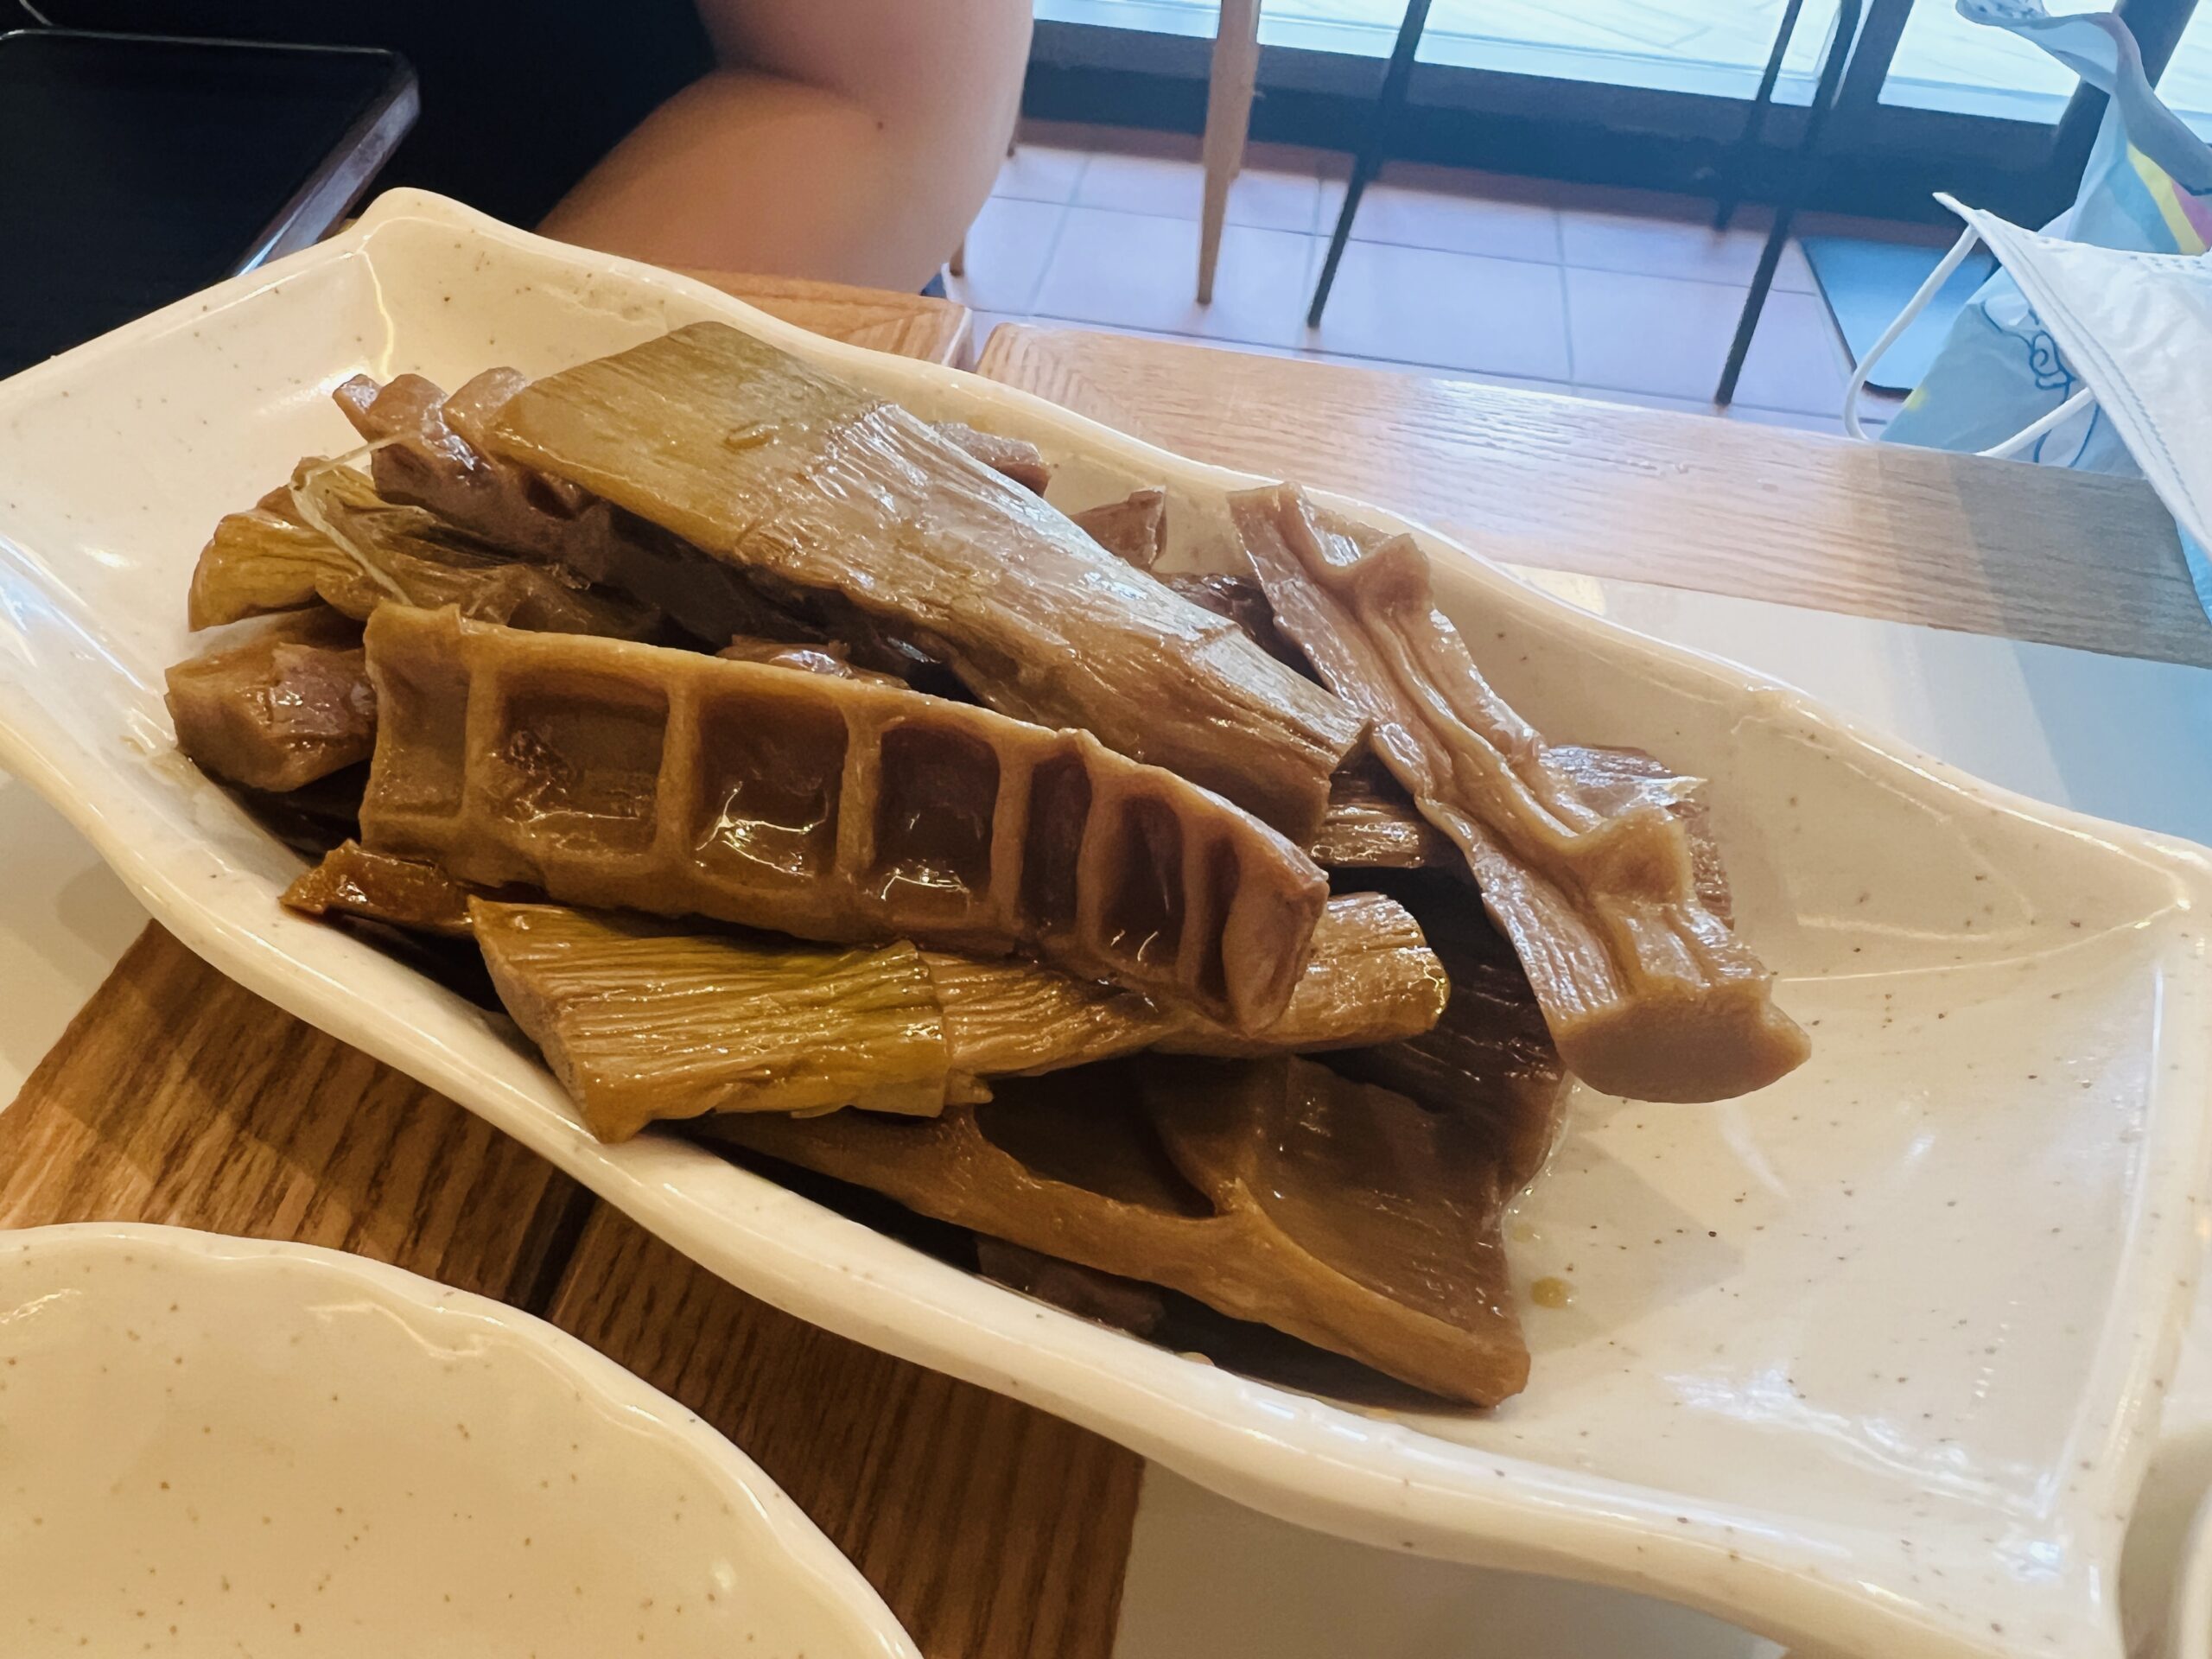 Shanghai Tan Pan-Fried Bun - Stewed Bamboo Shoot in Oyster Sauce